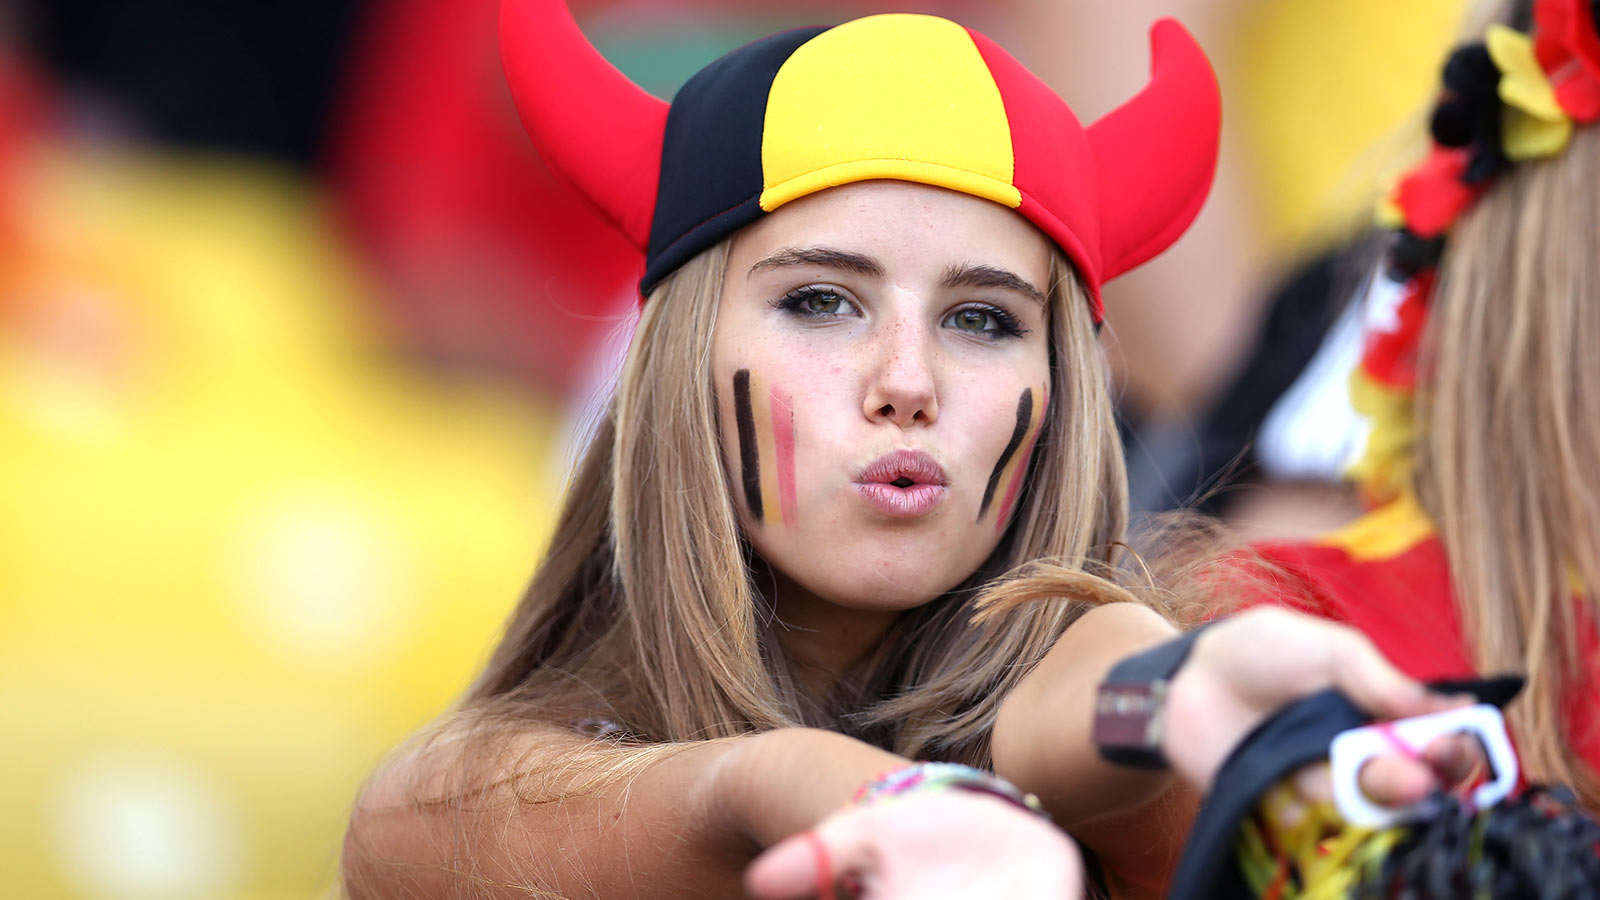 Axelle Despiegelaere FiFA World Cup Women Belgium Face Paint Freckles Horns Hat Blonde Celebrity 1600x900